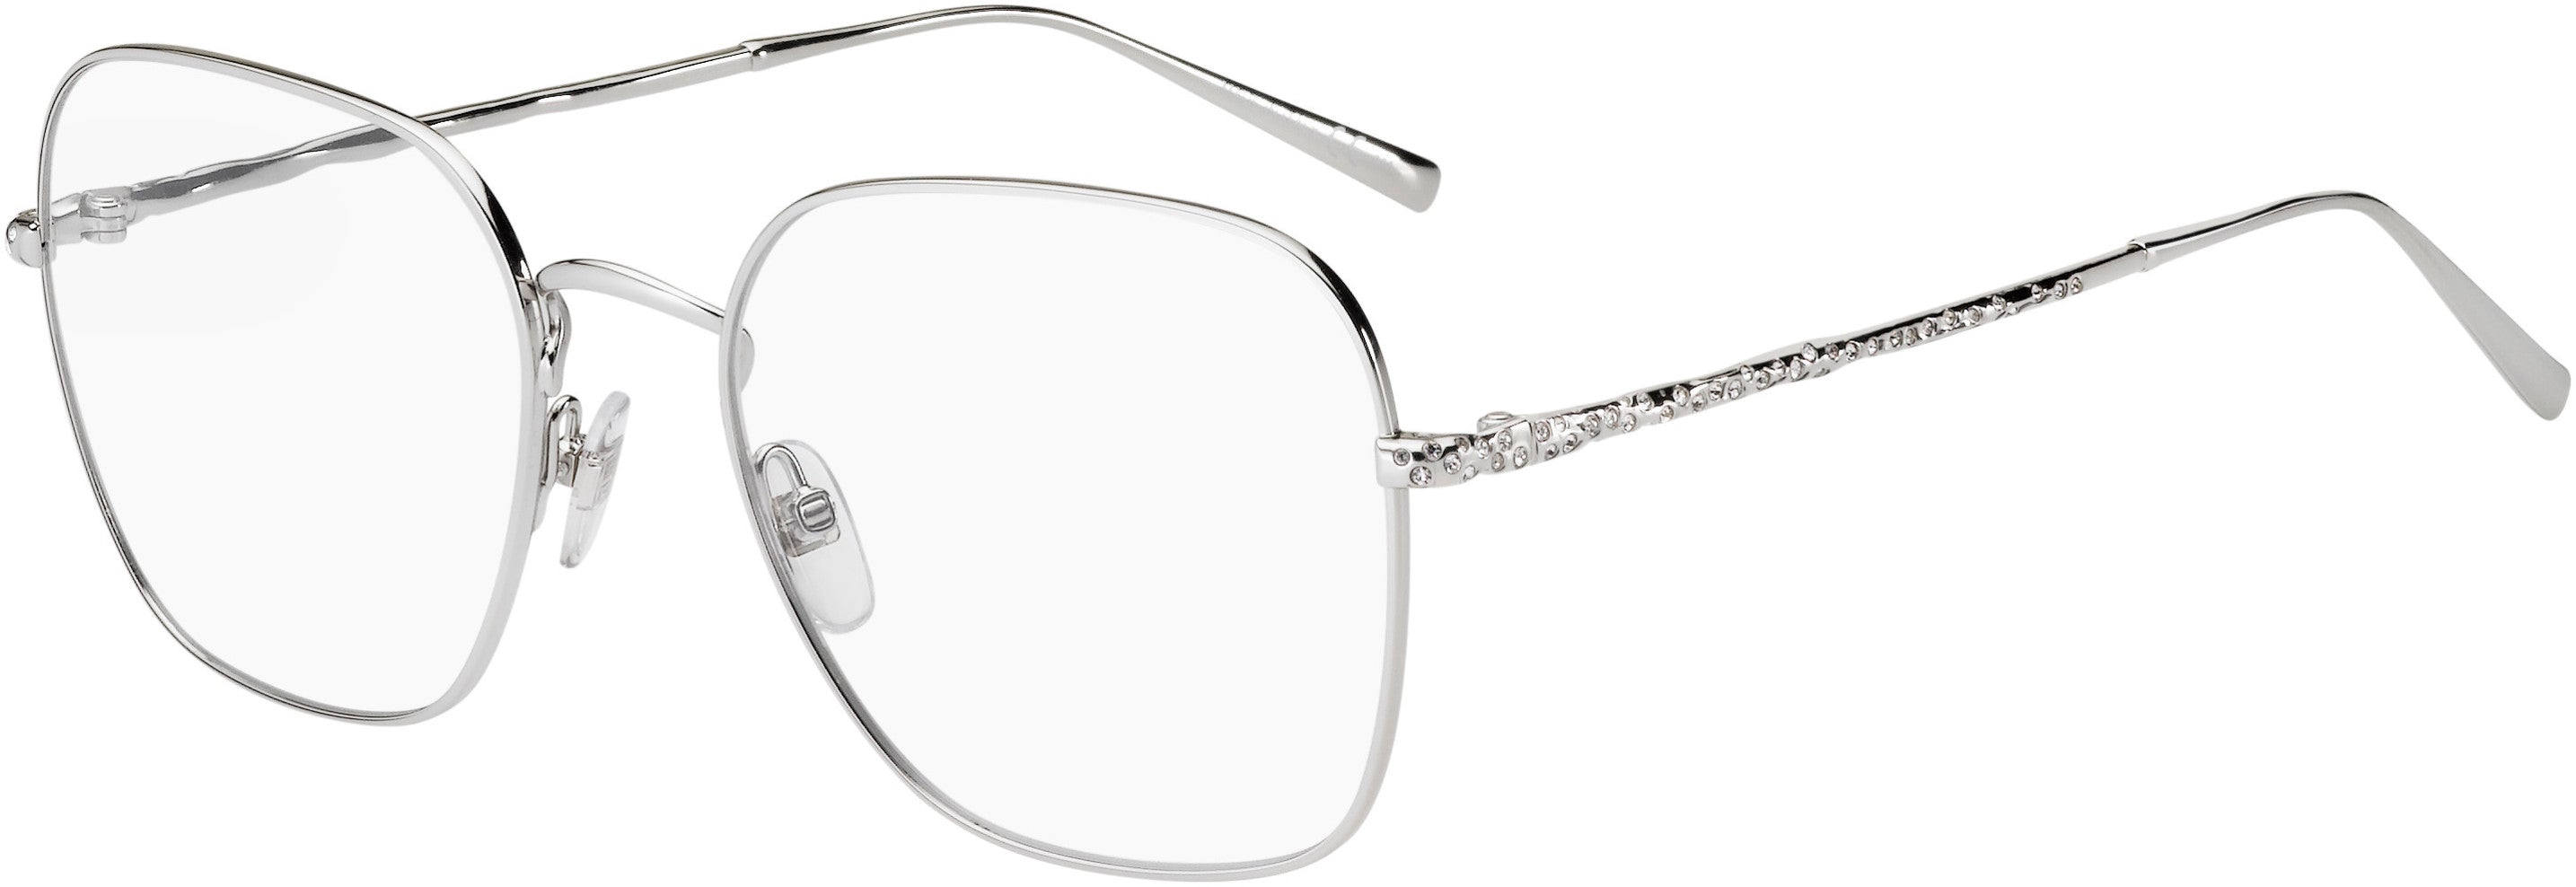  Givenchy 0128 Square Eyeglasses 0010-0010  Palladium (00 Demo Lens)